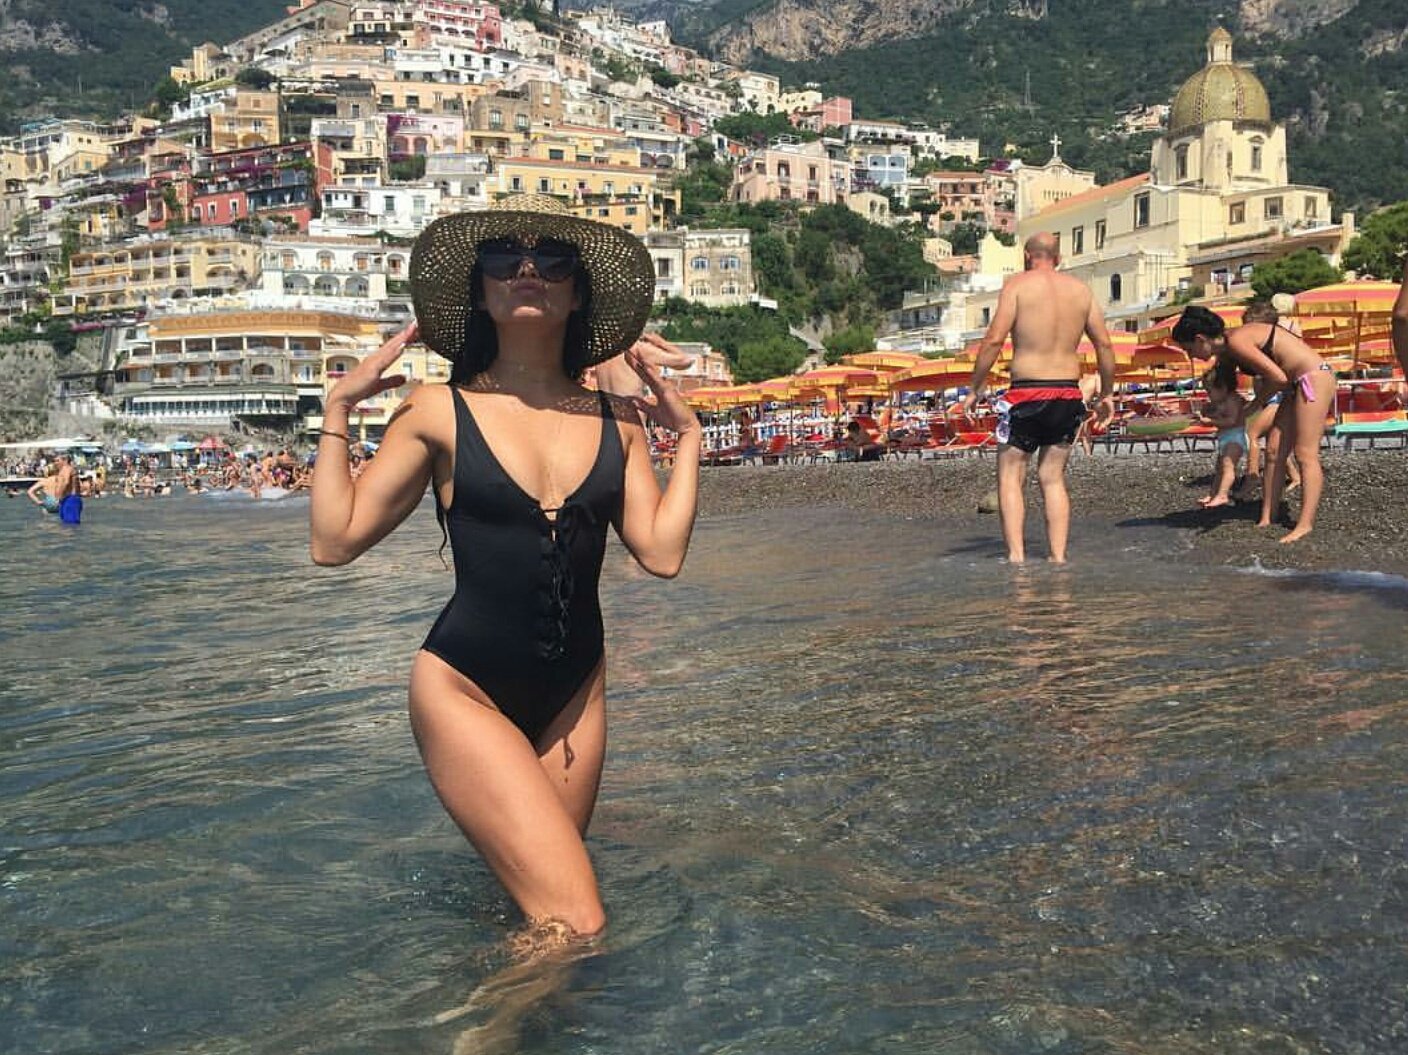 bid professionel tjære Vanessa Hudgens på Twitter: "I left my heart... in Positano ❤ #VsVivaItaly  https://t.co/aXGcUMnzWV" / Twitter